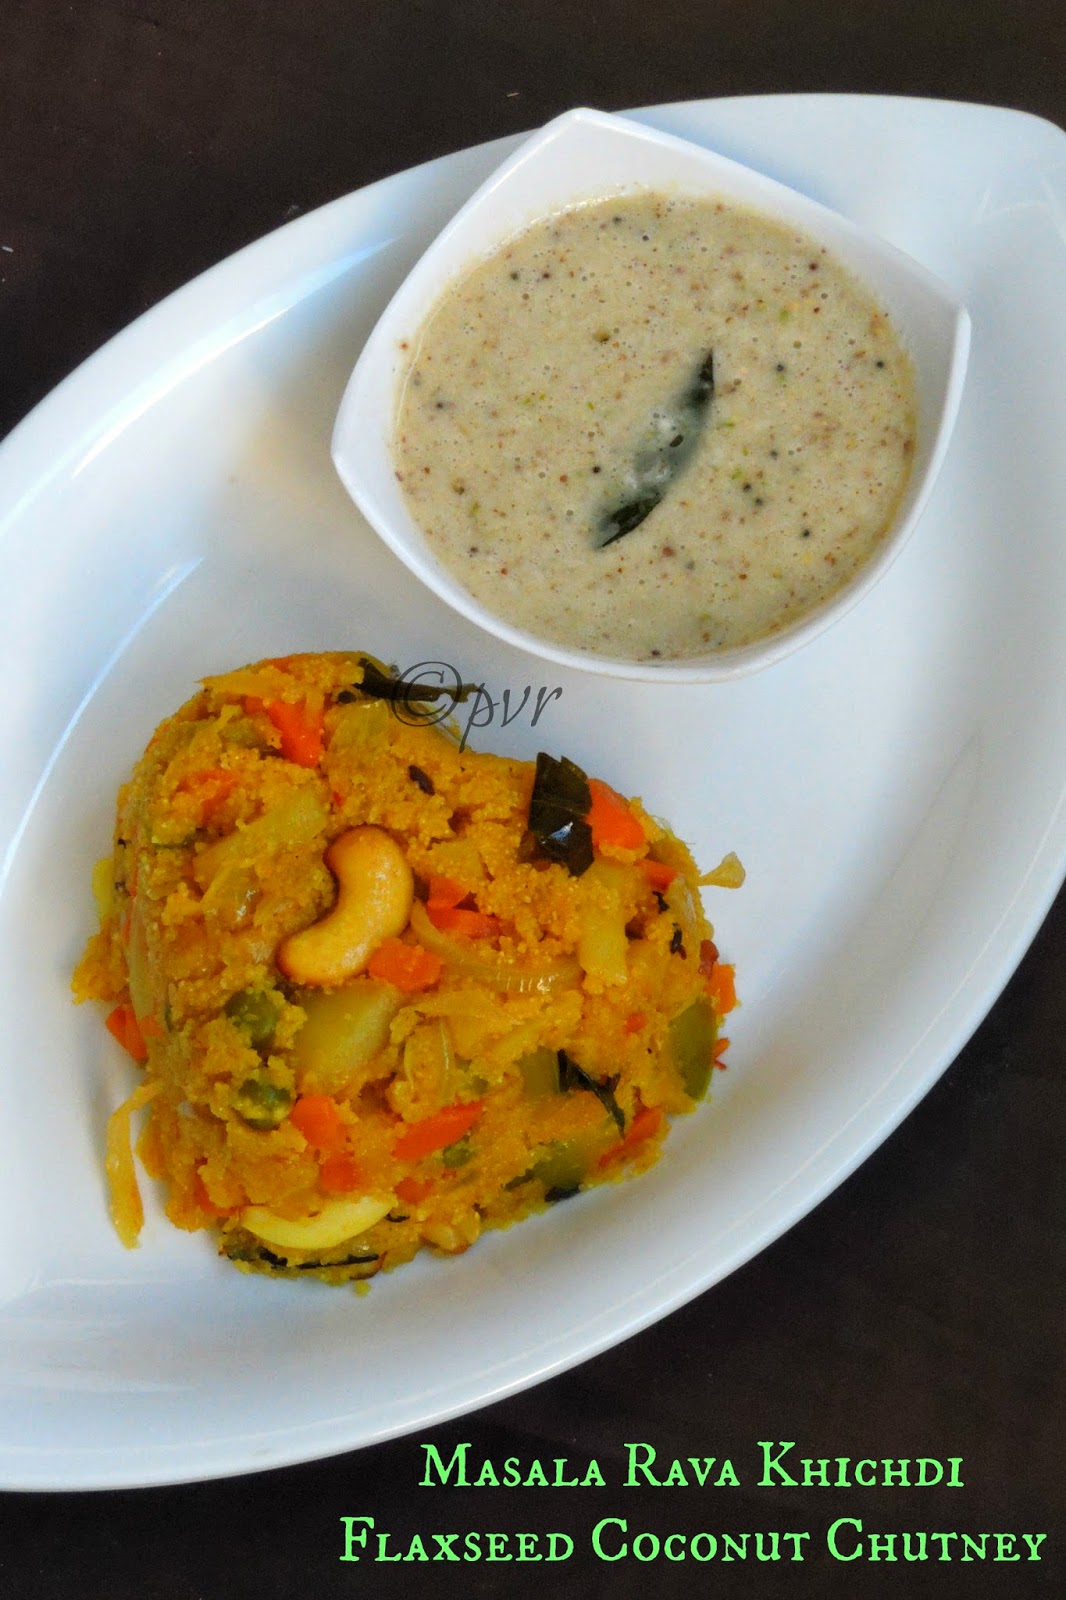 Masala Rava Khichdi, flaxseed chutney